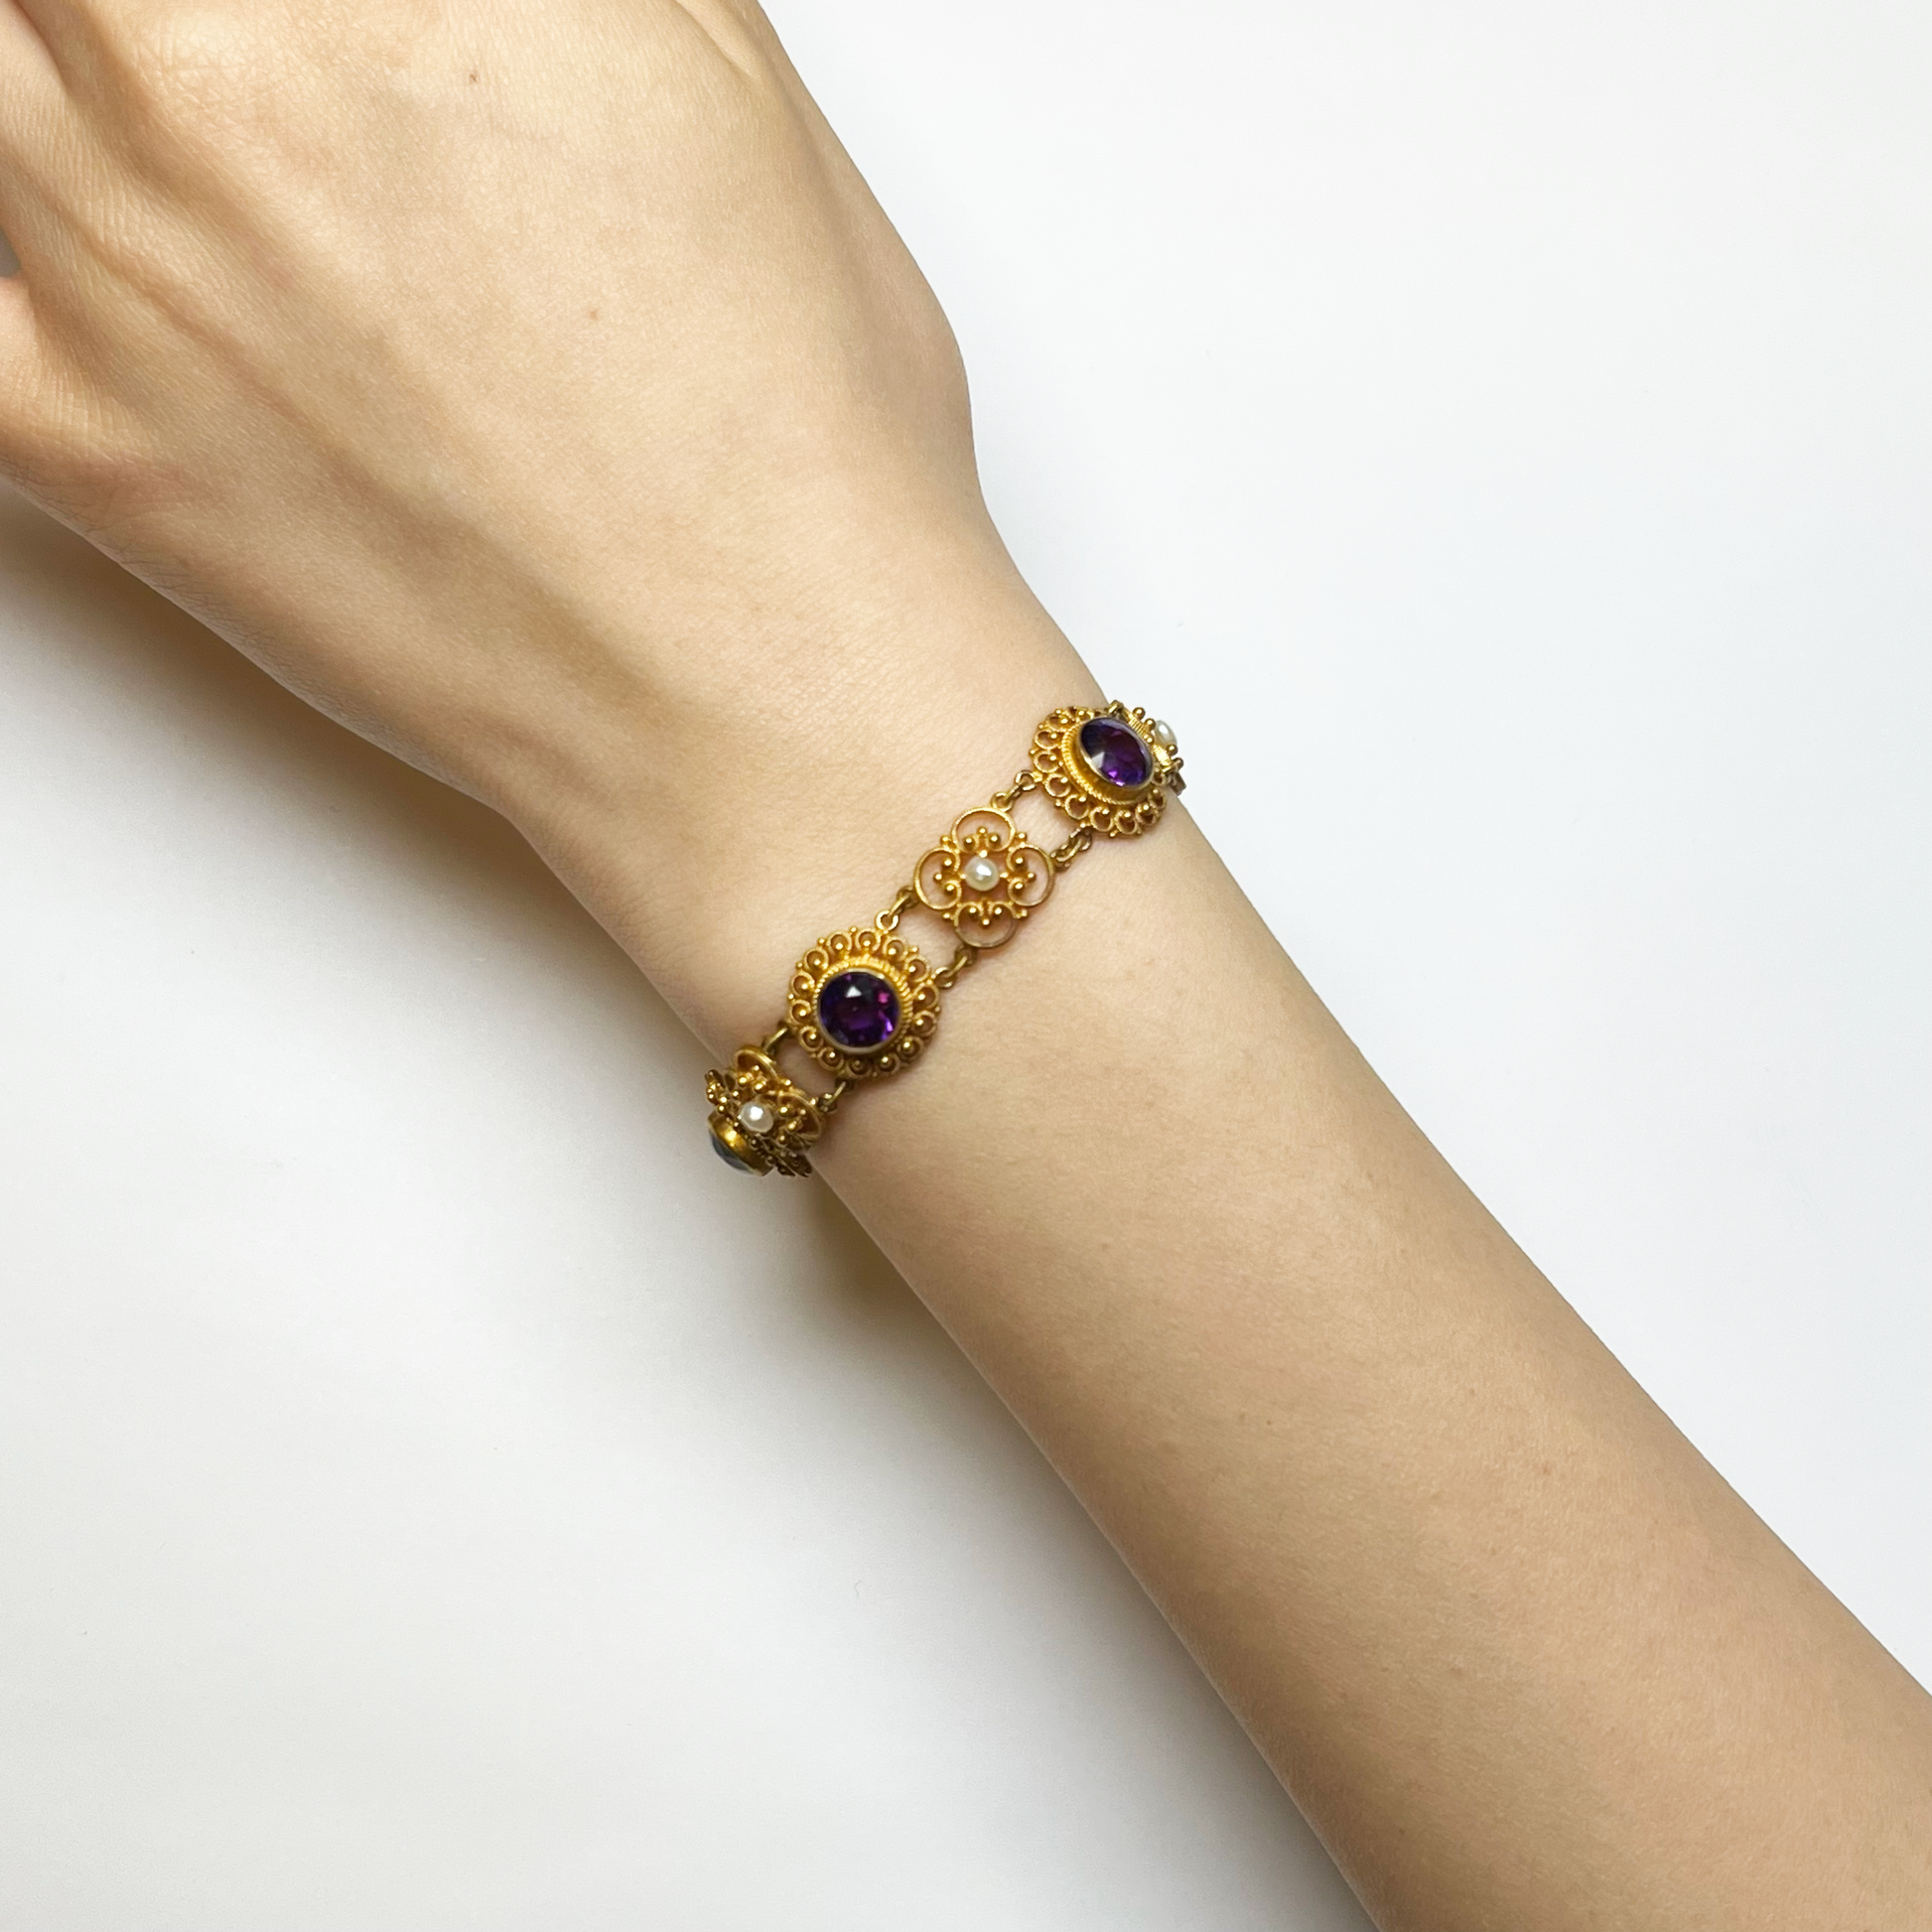 Victorian 14KT Yellow Gold Amethyst & Pearl Bracelet worn on wrist